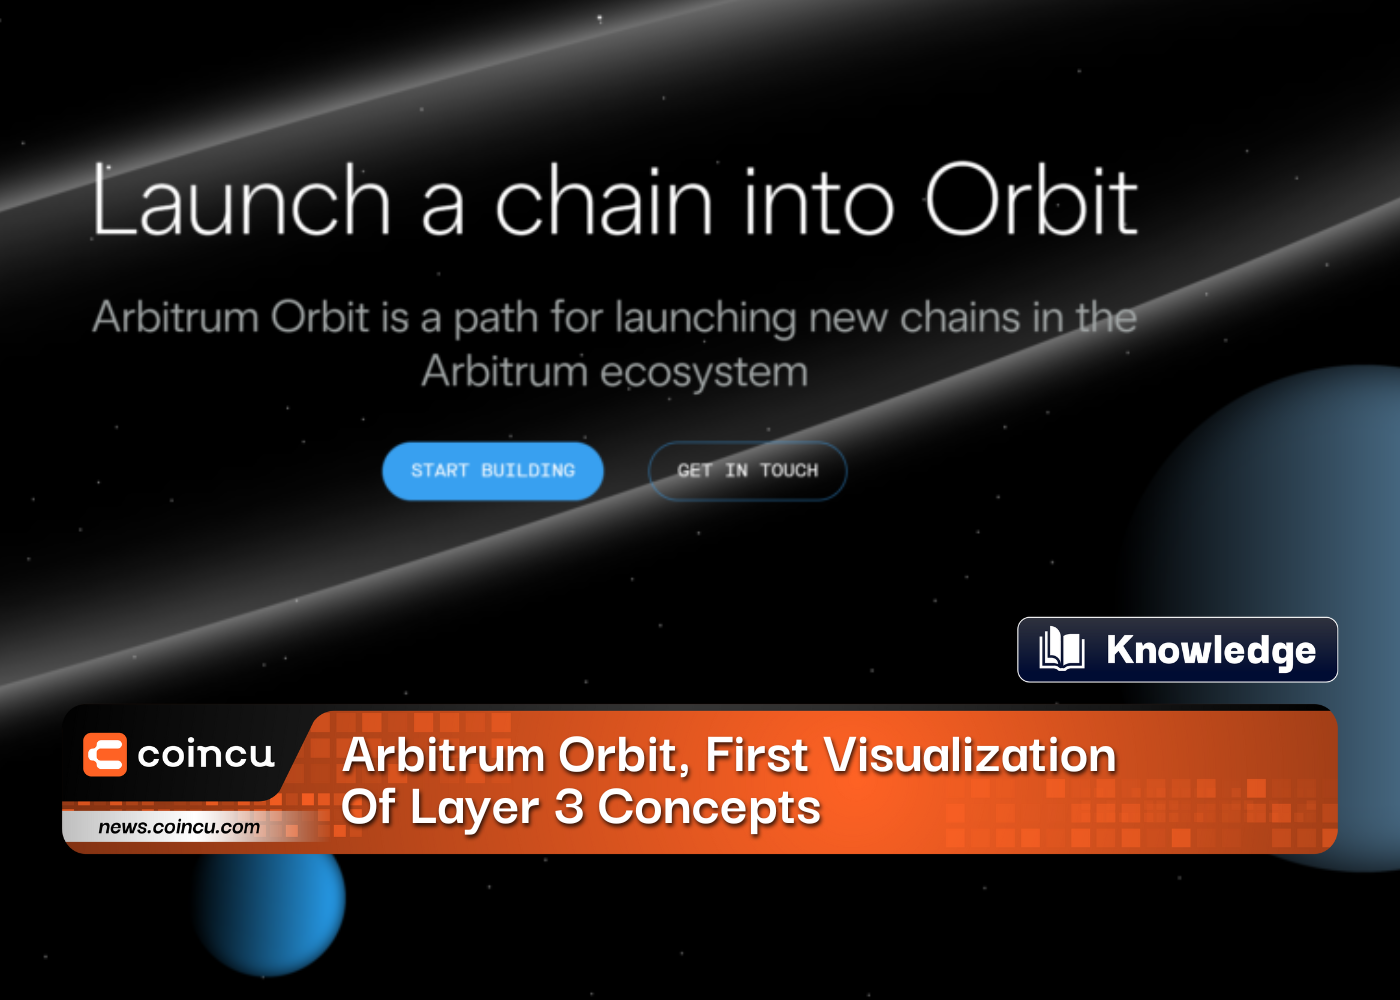 Arbitrum Orbit, First Visualization Of Layer 3 Concepts